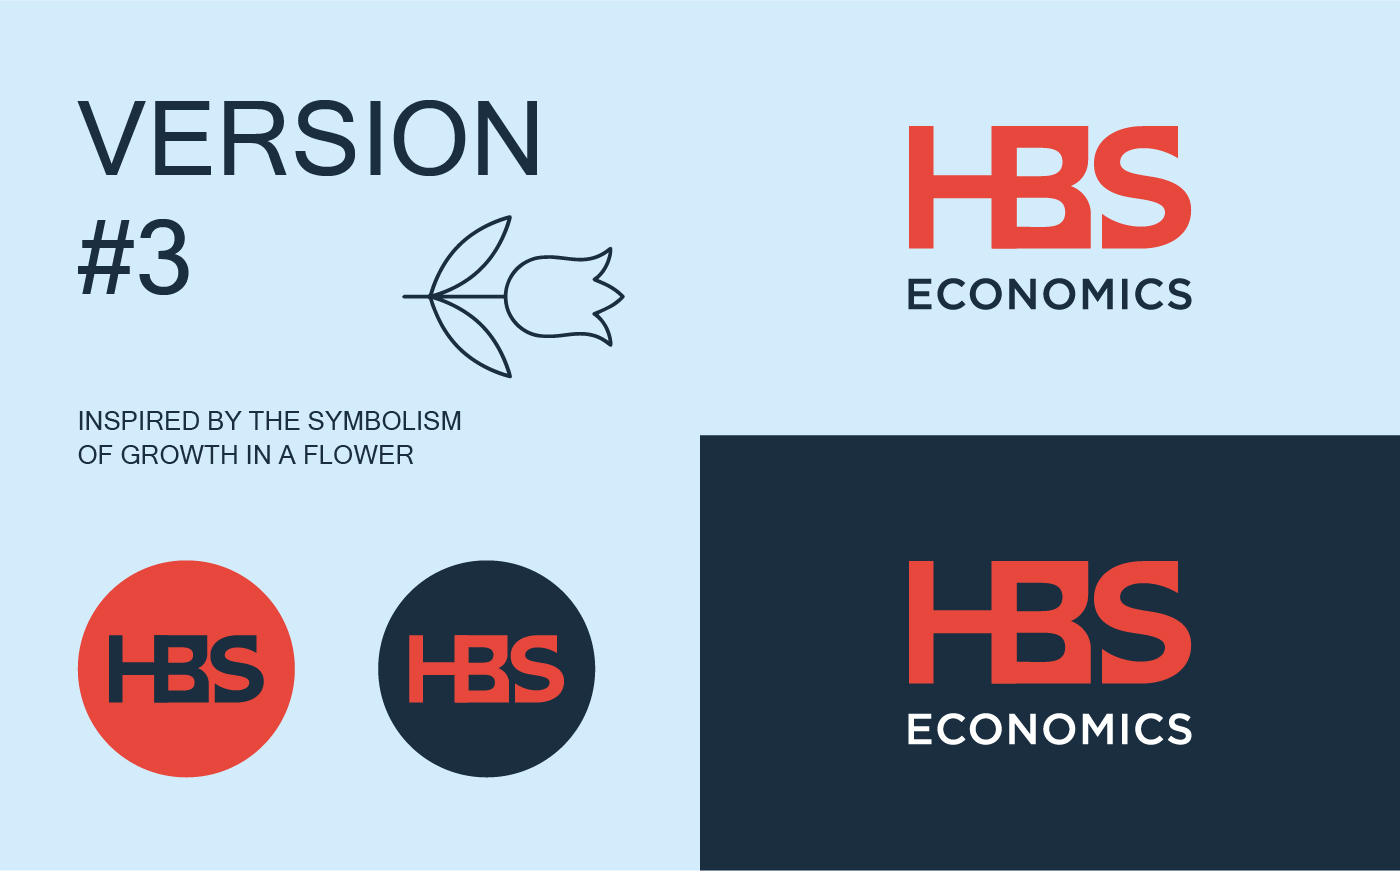 HBS Economic new logo version 3